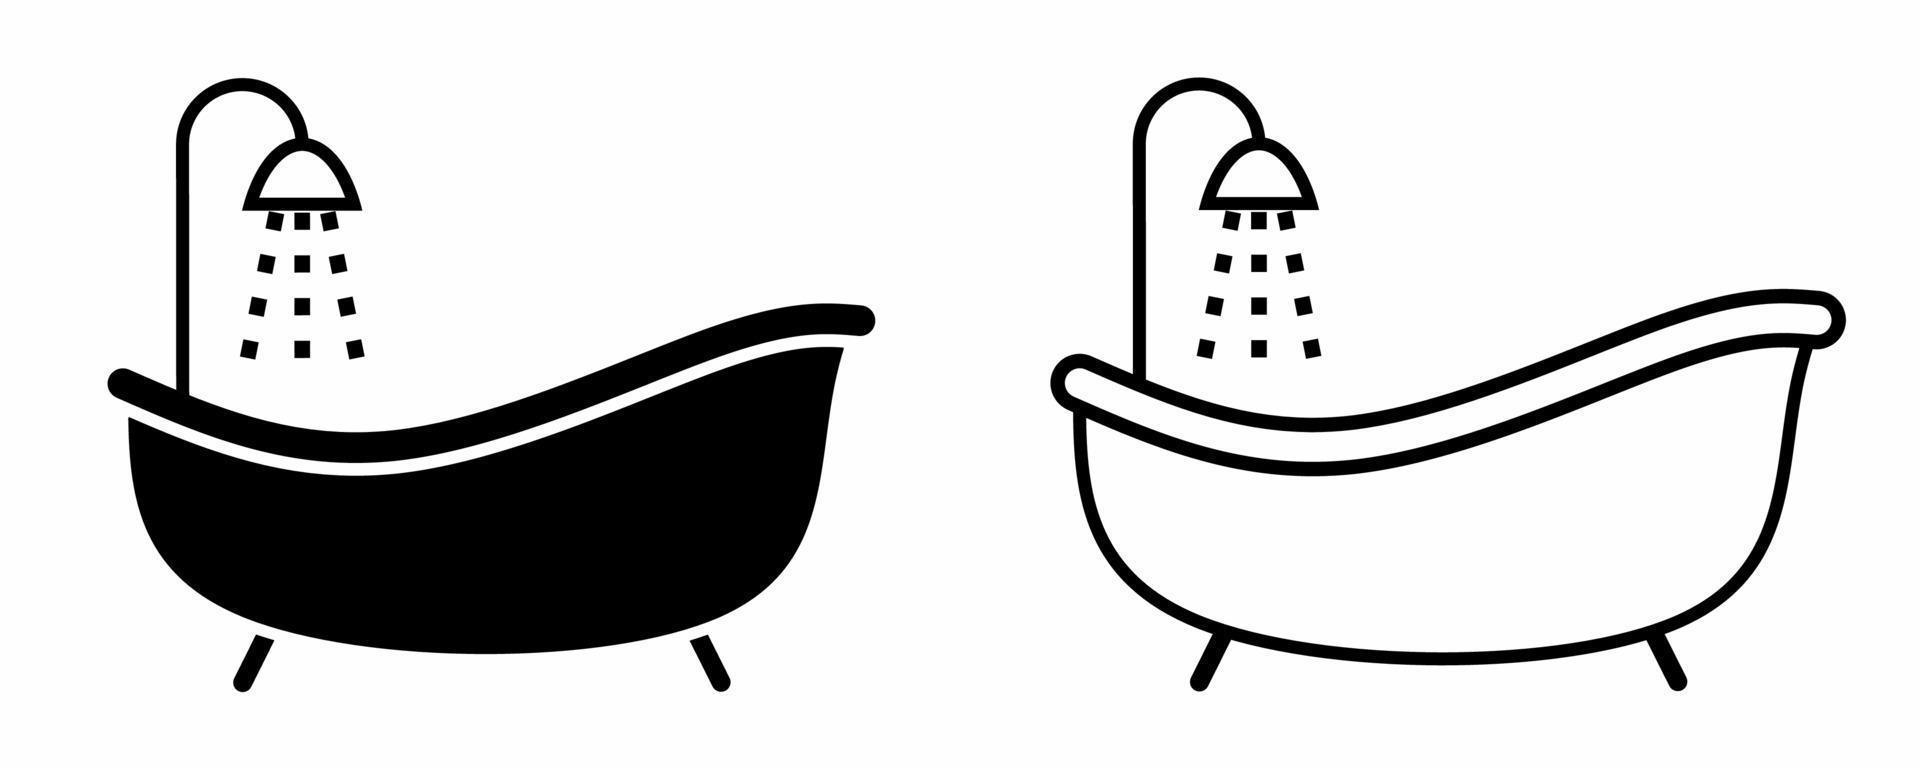 delineie o conjunto de ícones de banheira de silhueta isolado no fundo branco vetor